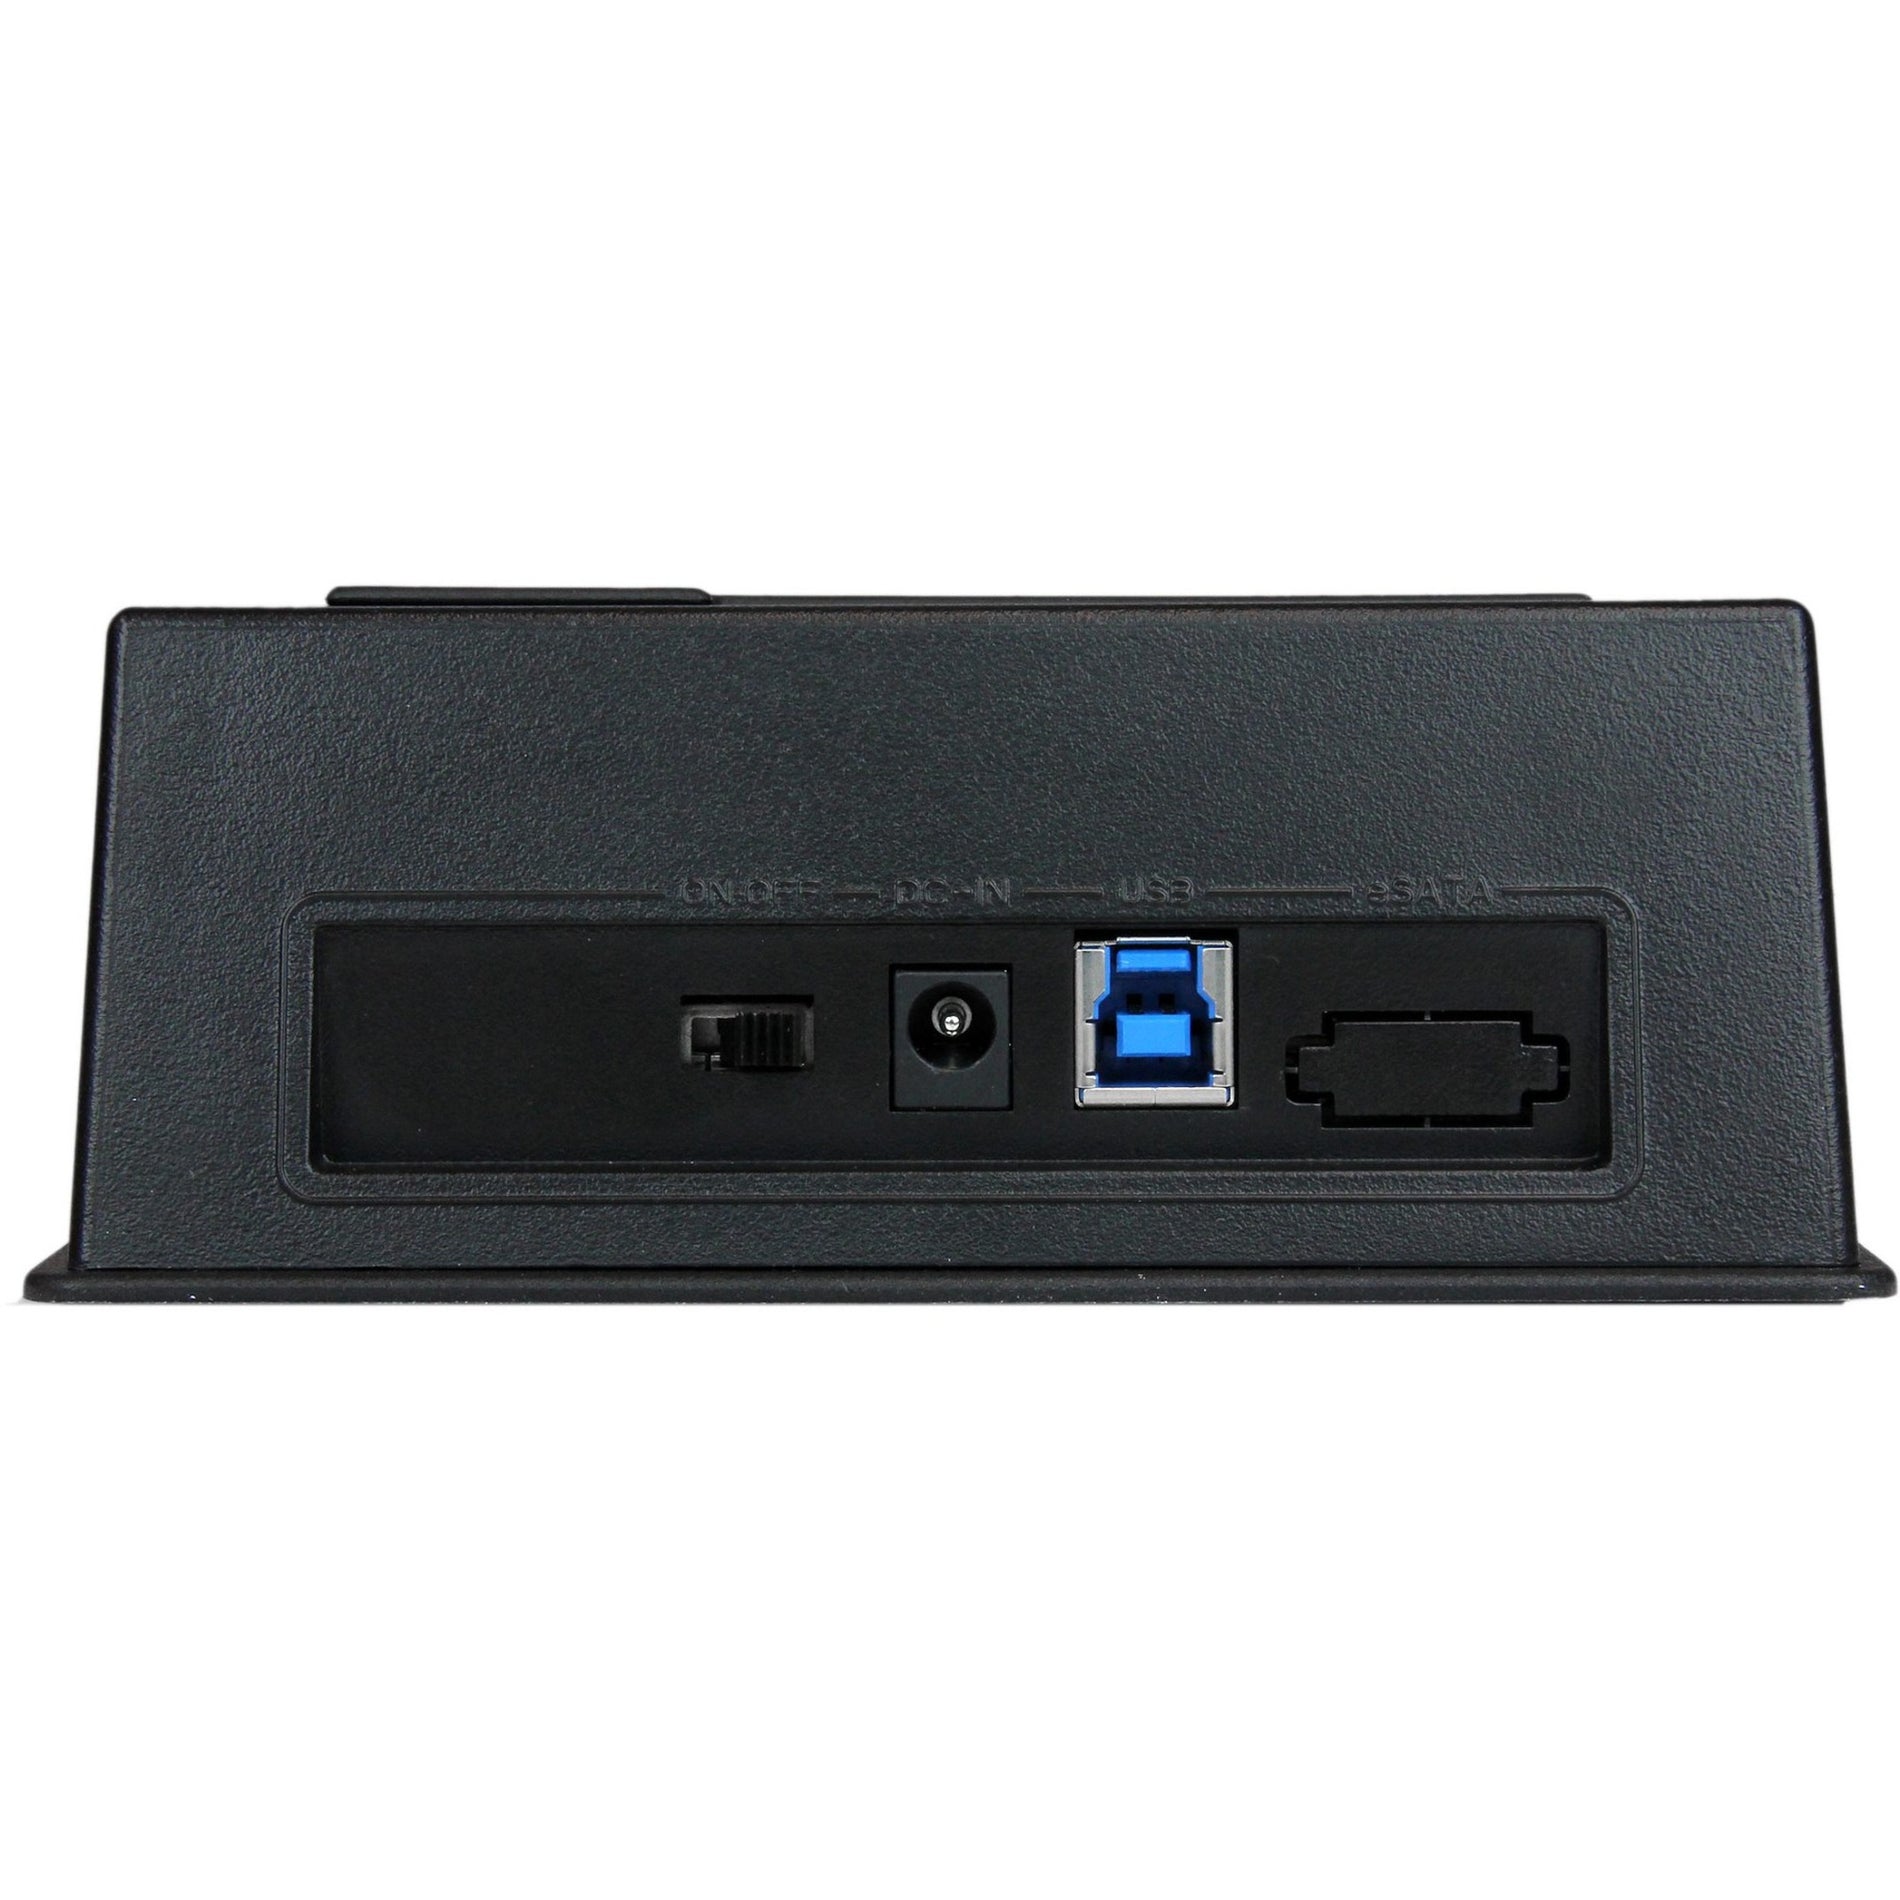 StarTech.com SDOCKU33BV USB 3.0 SATA III Hard Drive Docking Station SSD / HDD with UASP, Fast Data Transfer and Easy External Storage